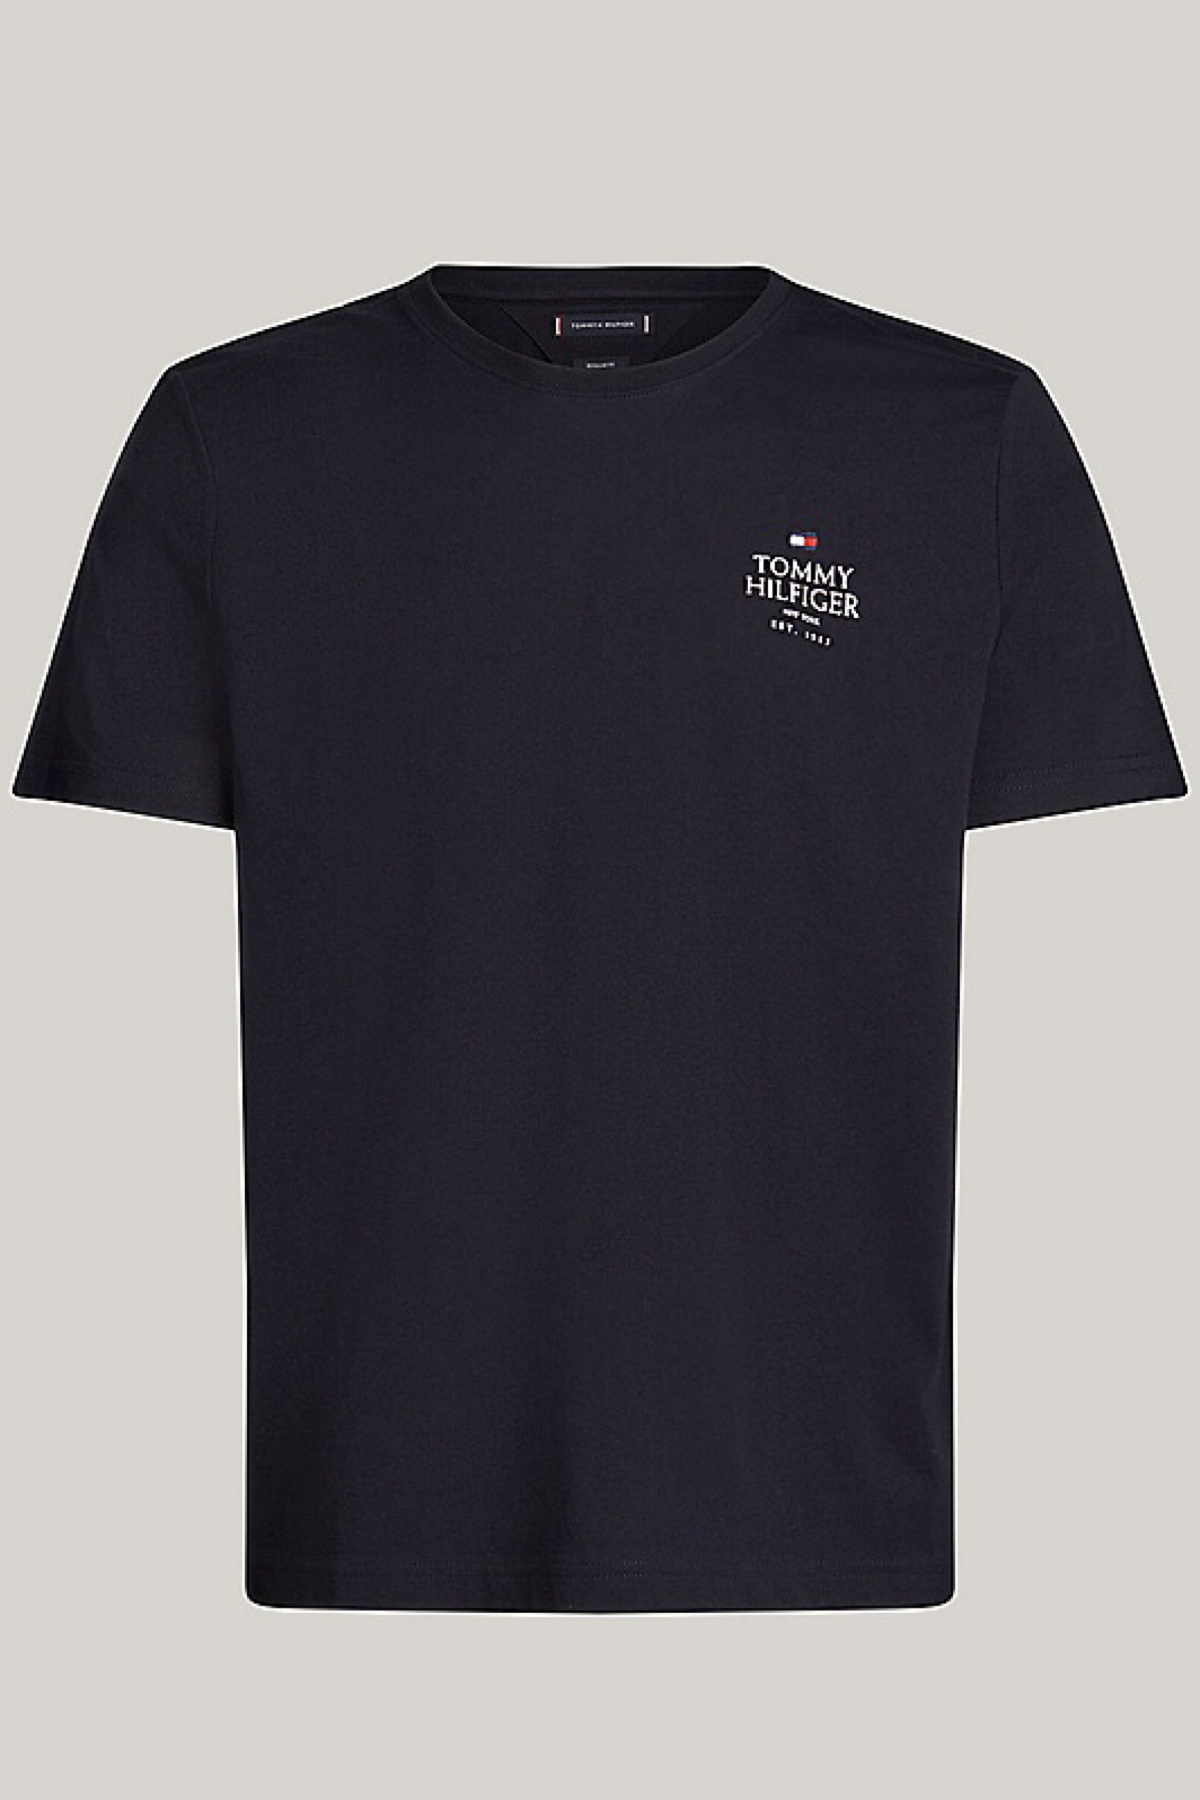 Tommy Hilfiger t-shirt con logo desert